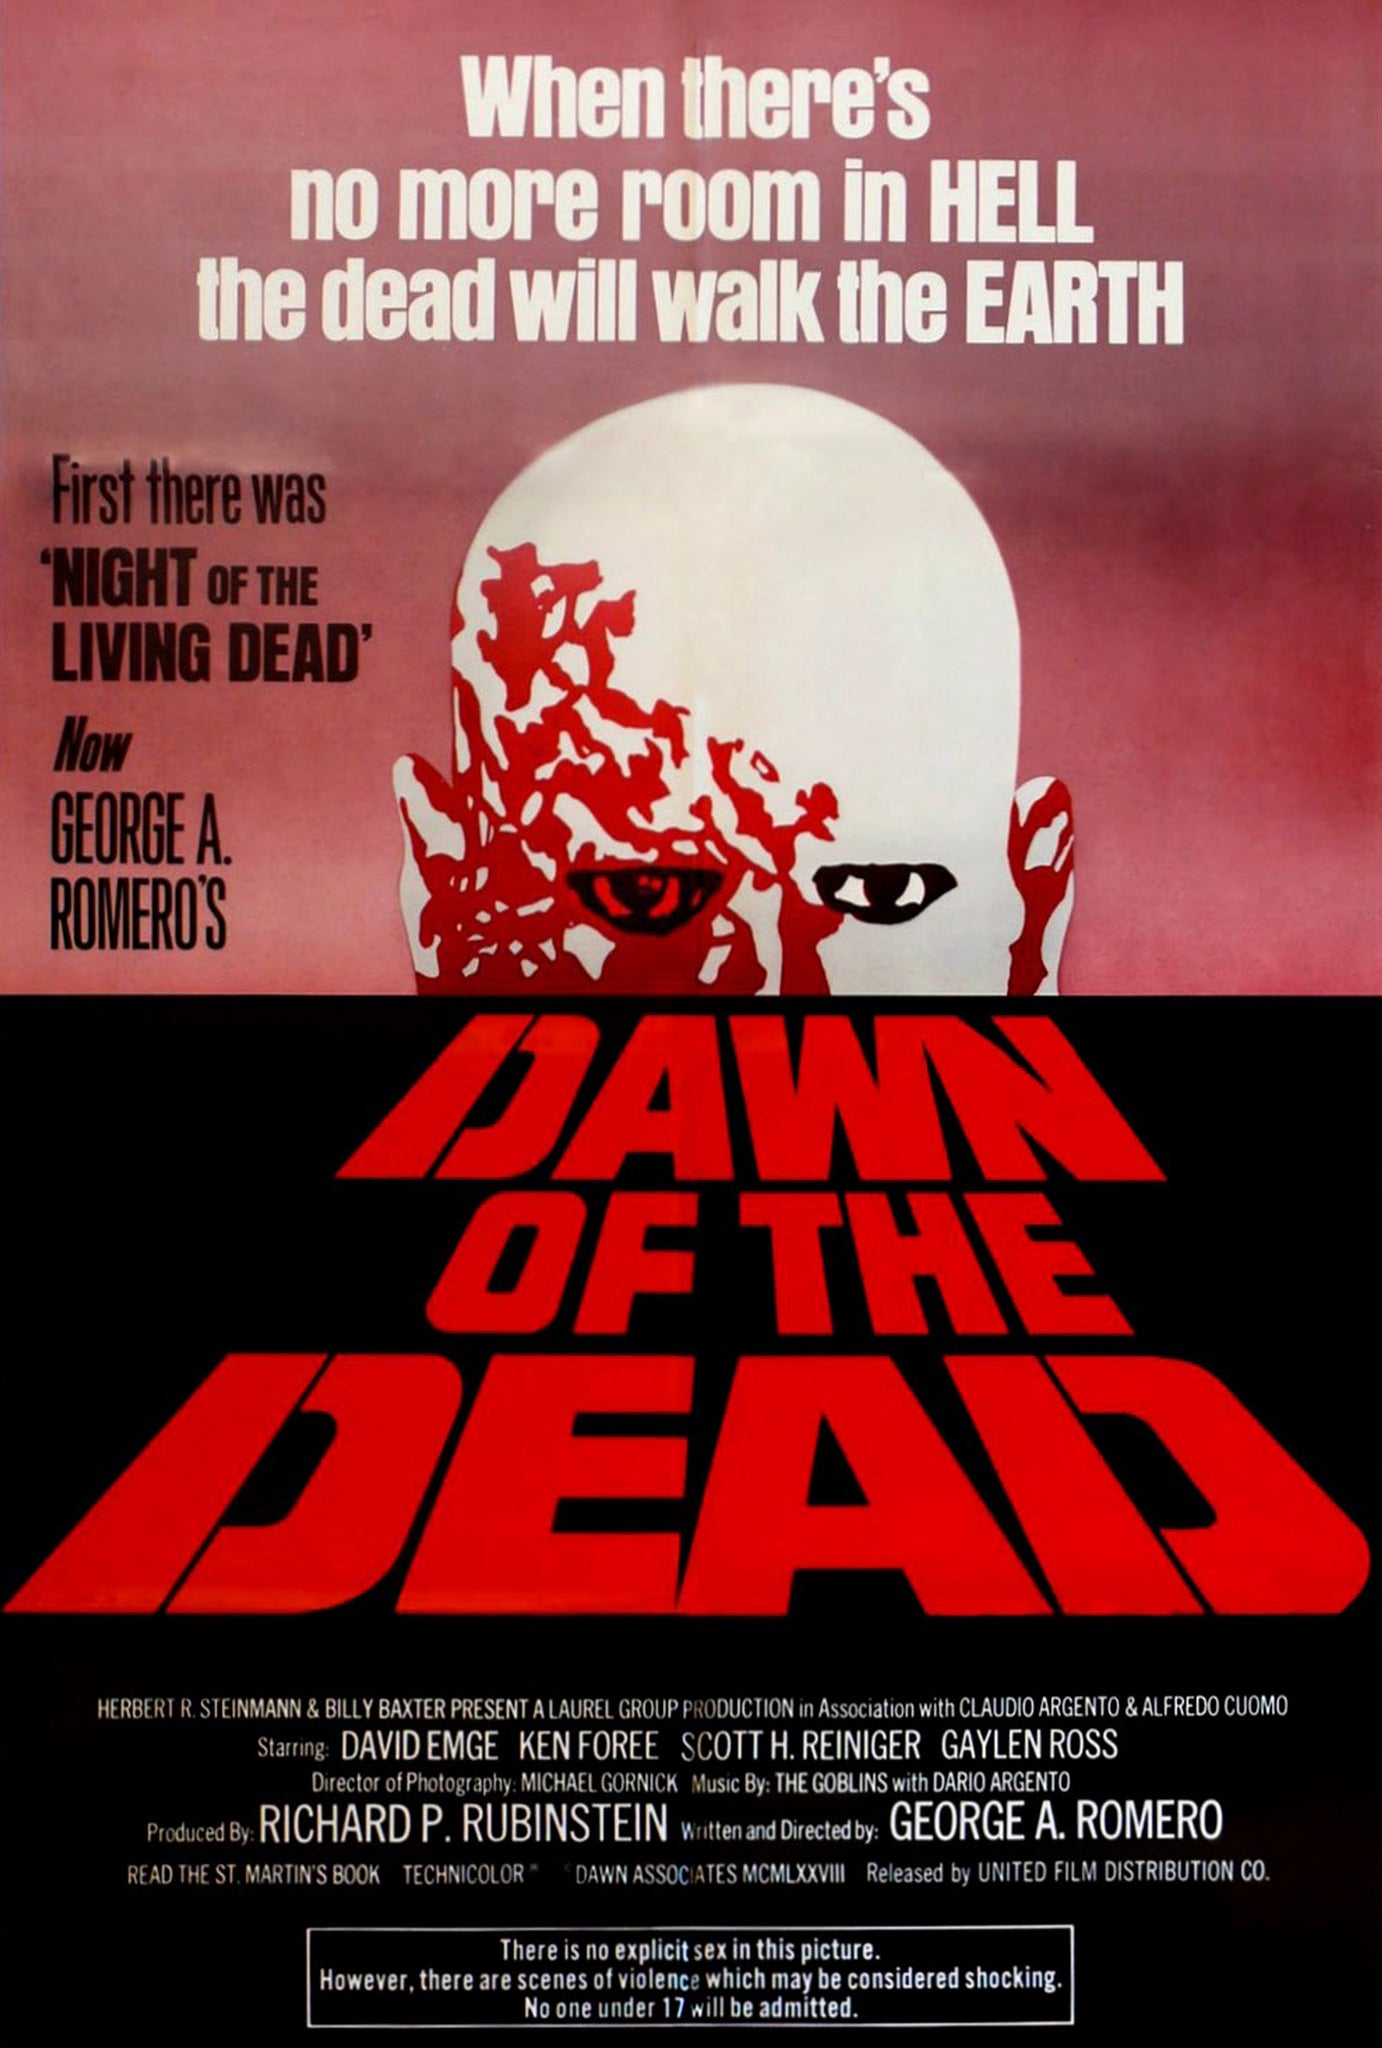 DAWN OF THE DEAD (1978 & 2004)